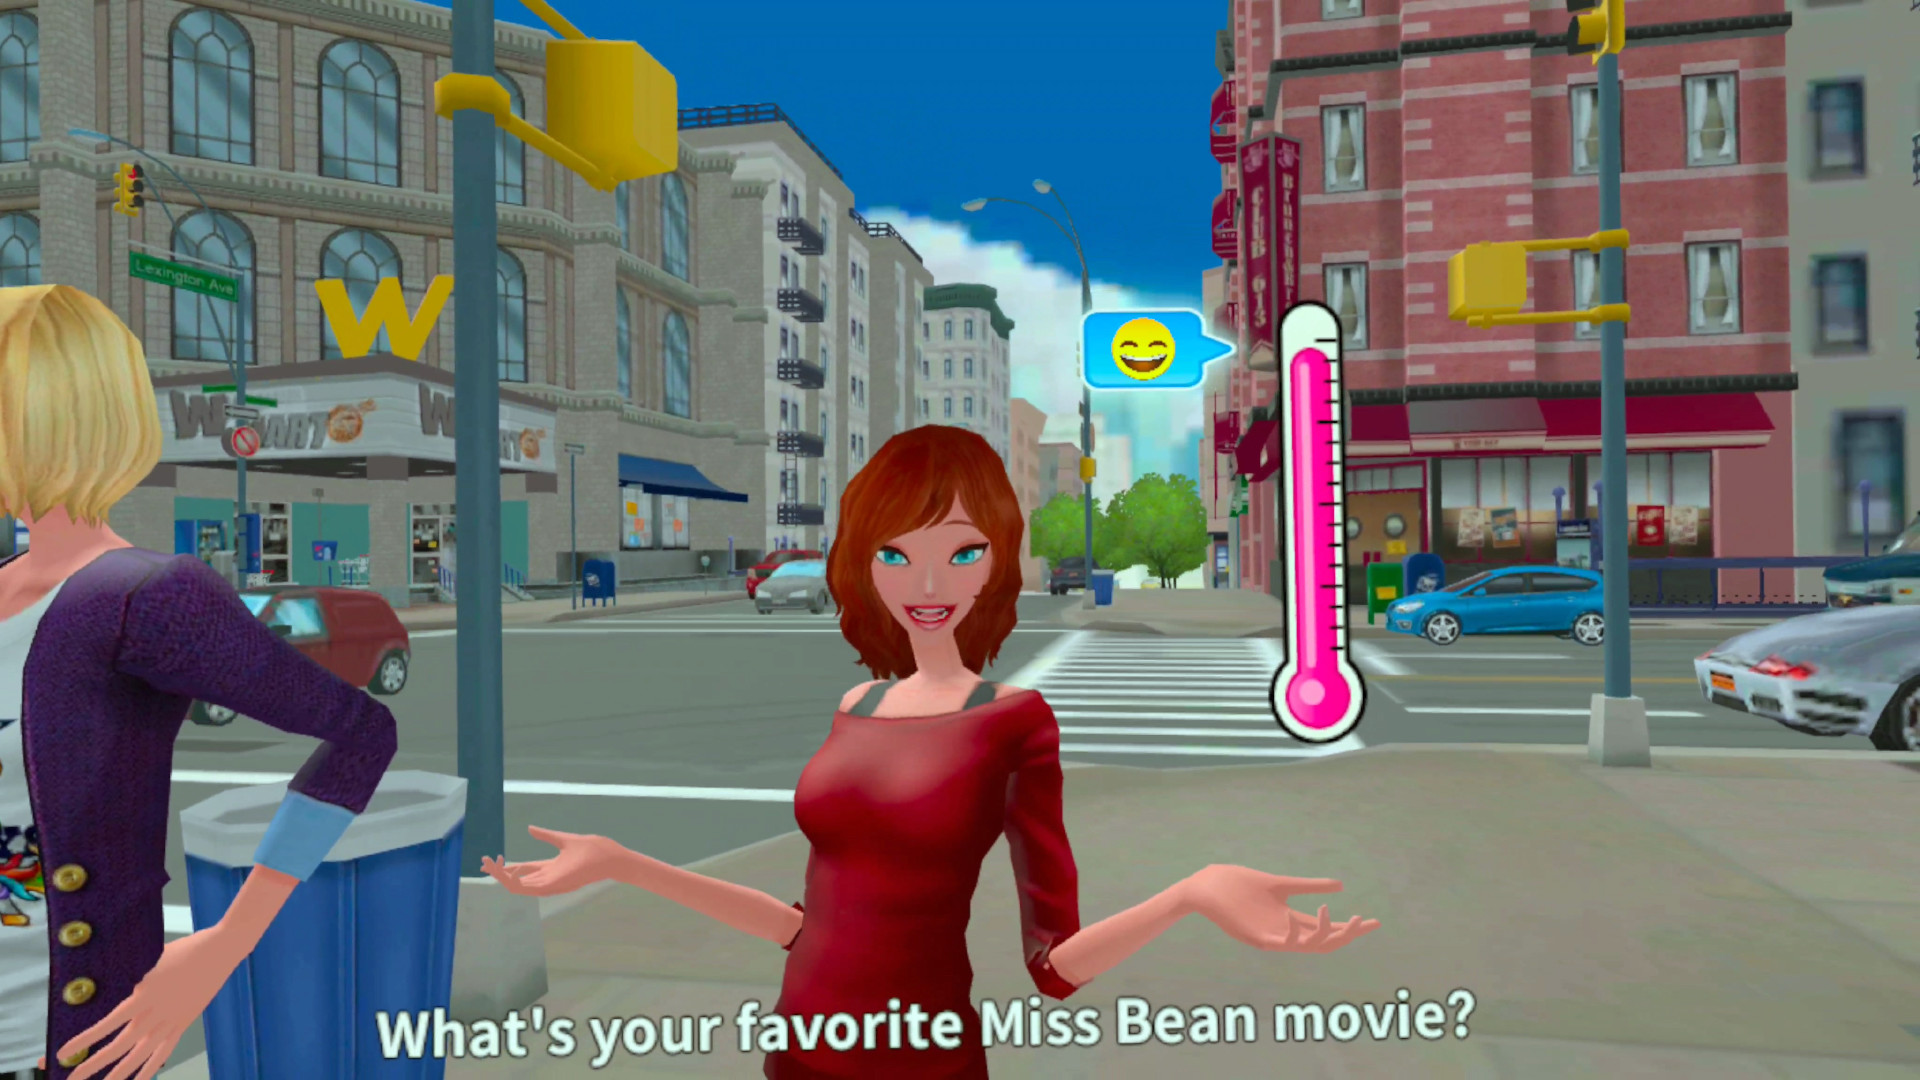 VR 뉴욕 스토리 screenshot